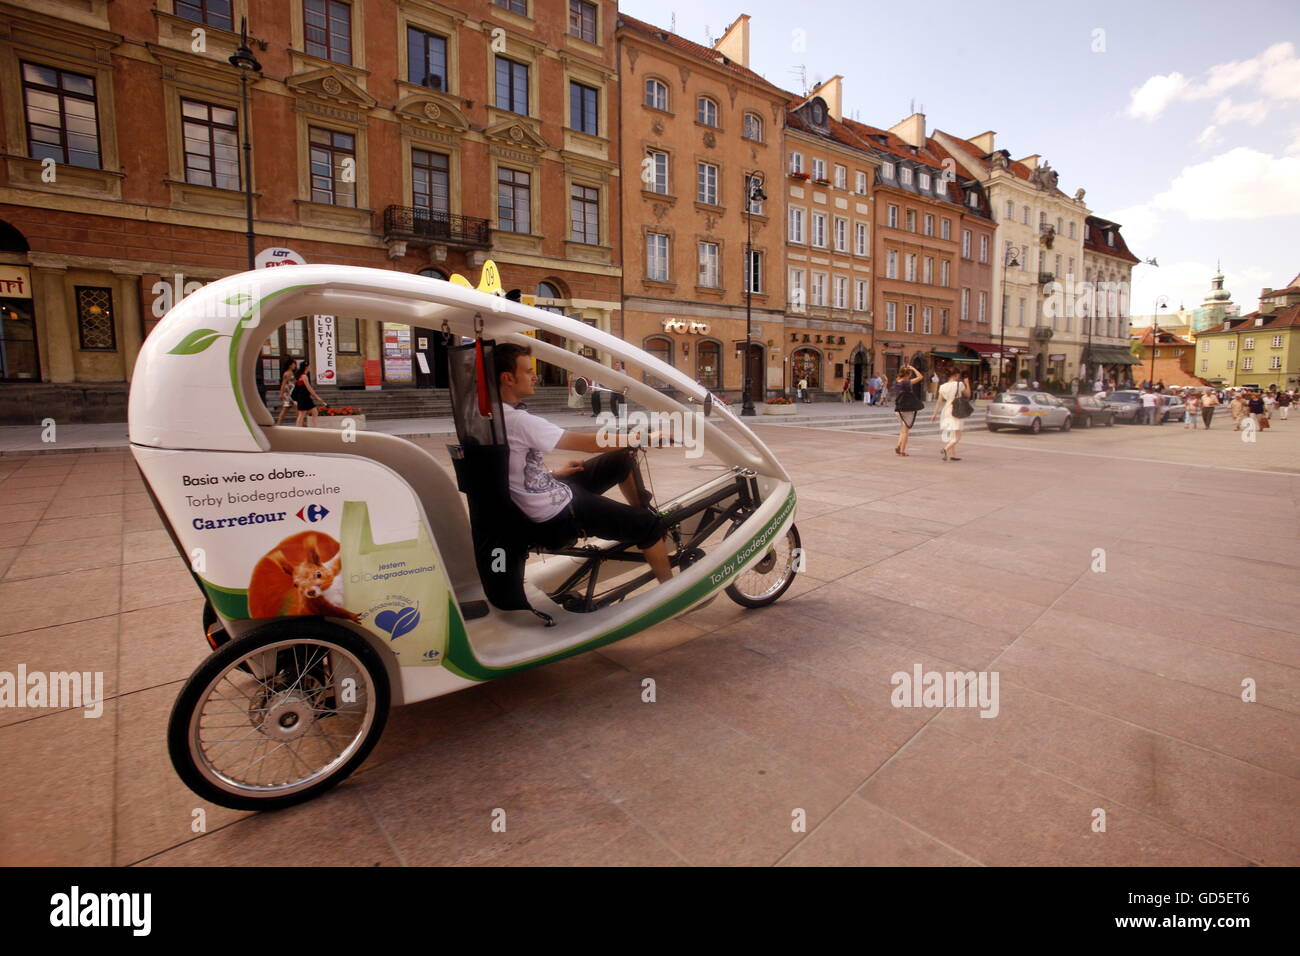 Ein Elektro-Taxi in Warschau in Polen, Ost-Europa. Stockfoto